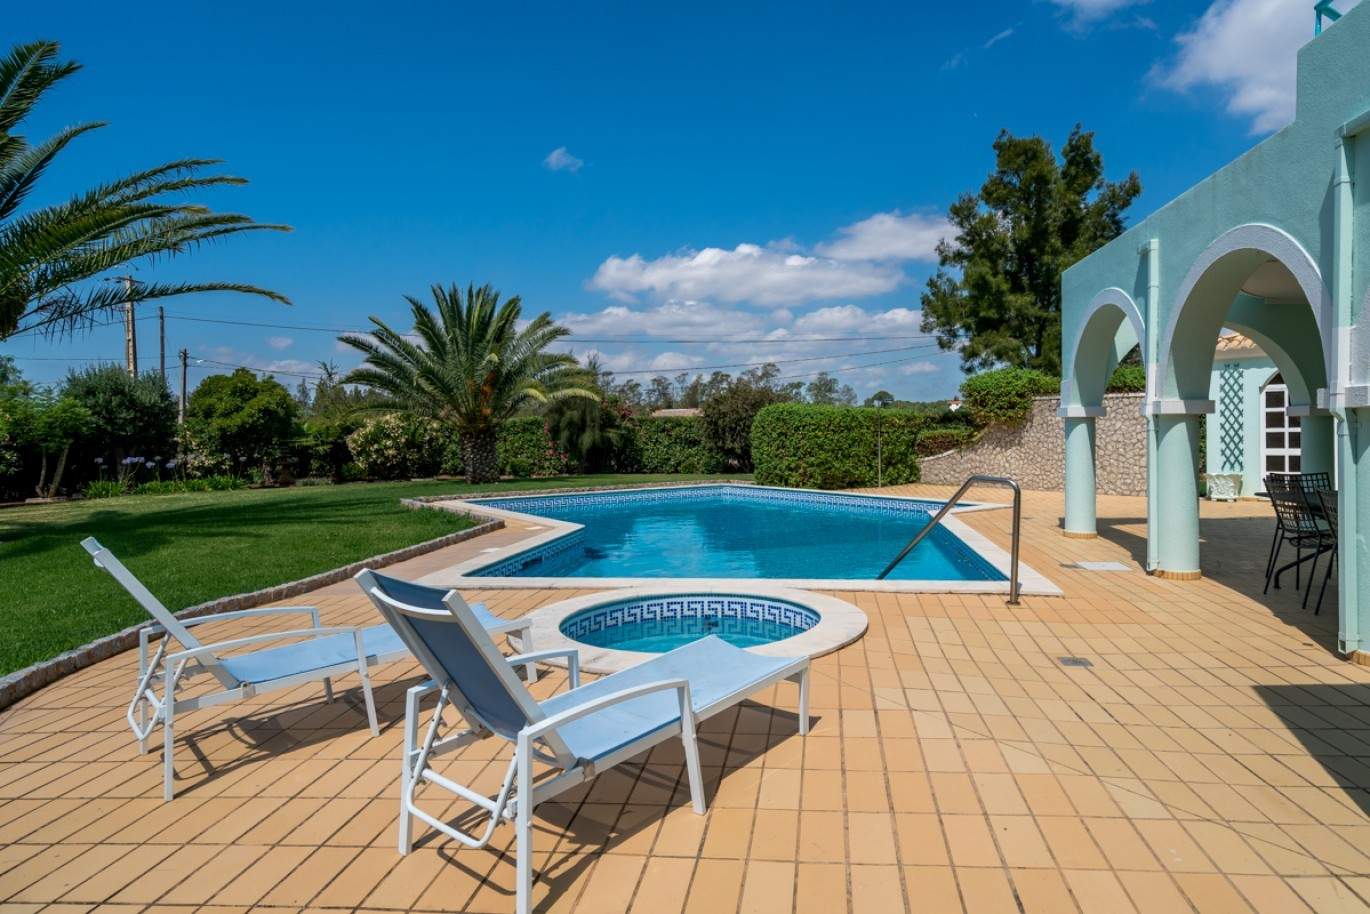 Sale of villa with garden and pool in Penina, Alvor, Algarve, Portugal_83414